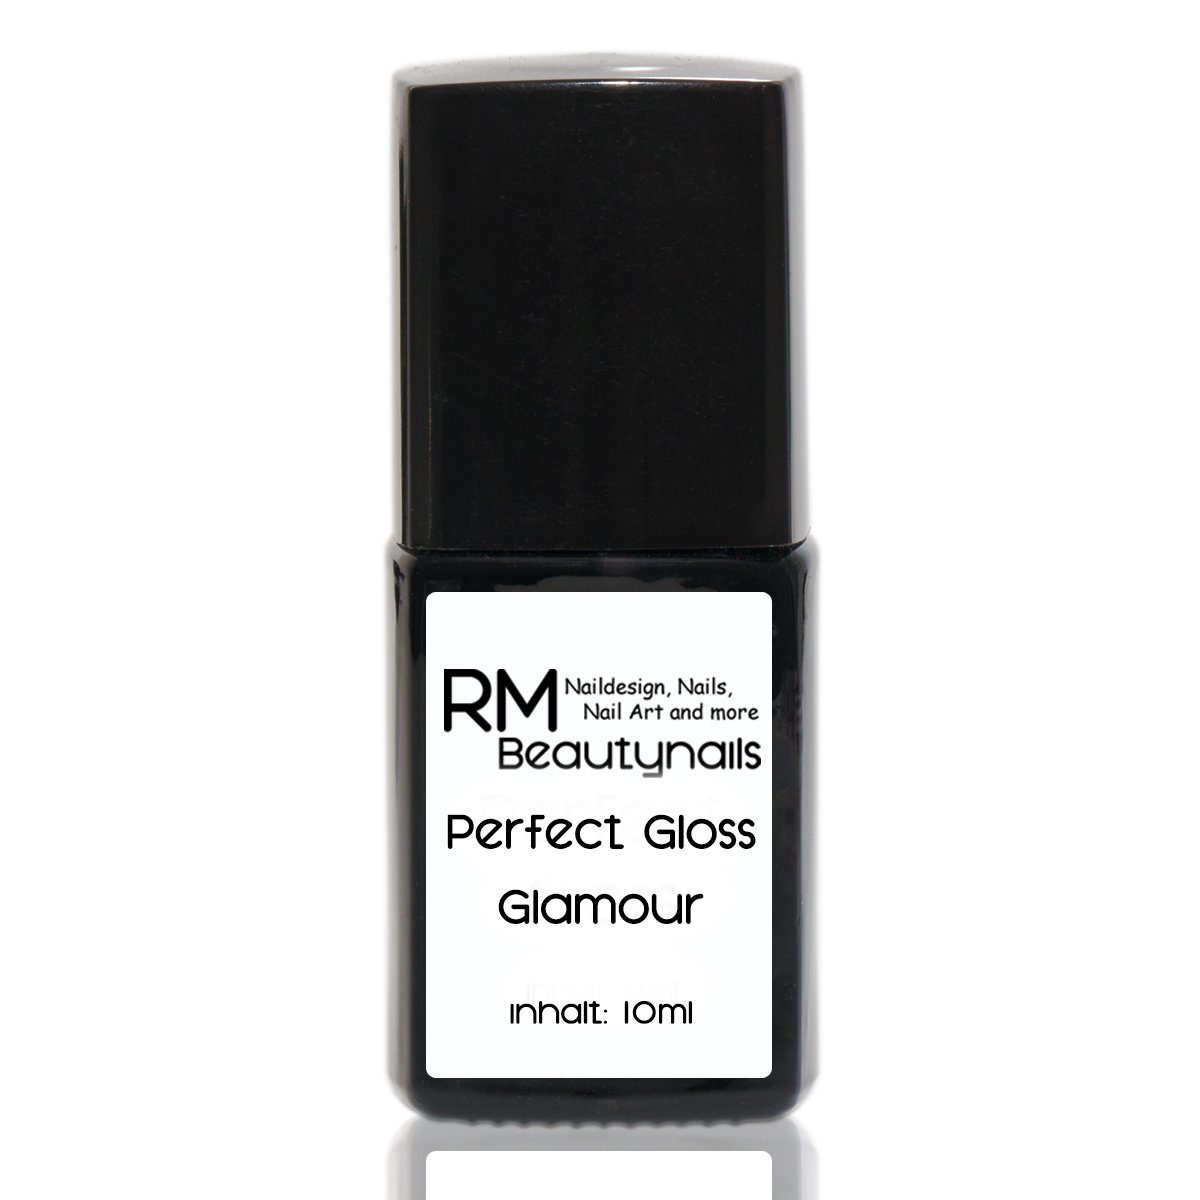 RM Beautynails UV-Gel Perfect Gloss Glanz UV-Gel Led Nagelgel Quickfinish Finishgel, vegan Perfect Gloss Glamour